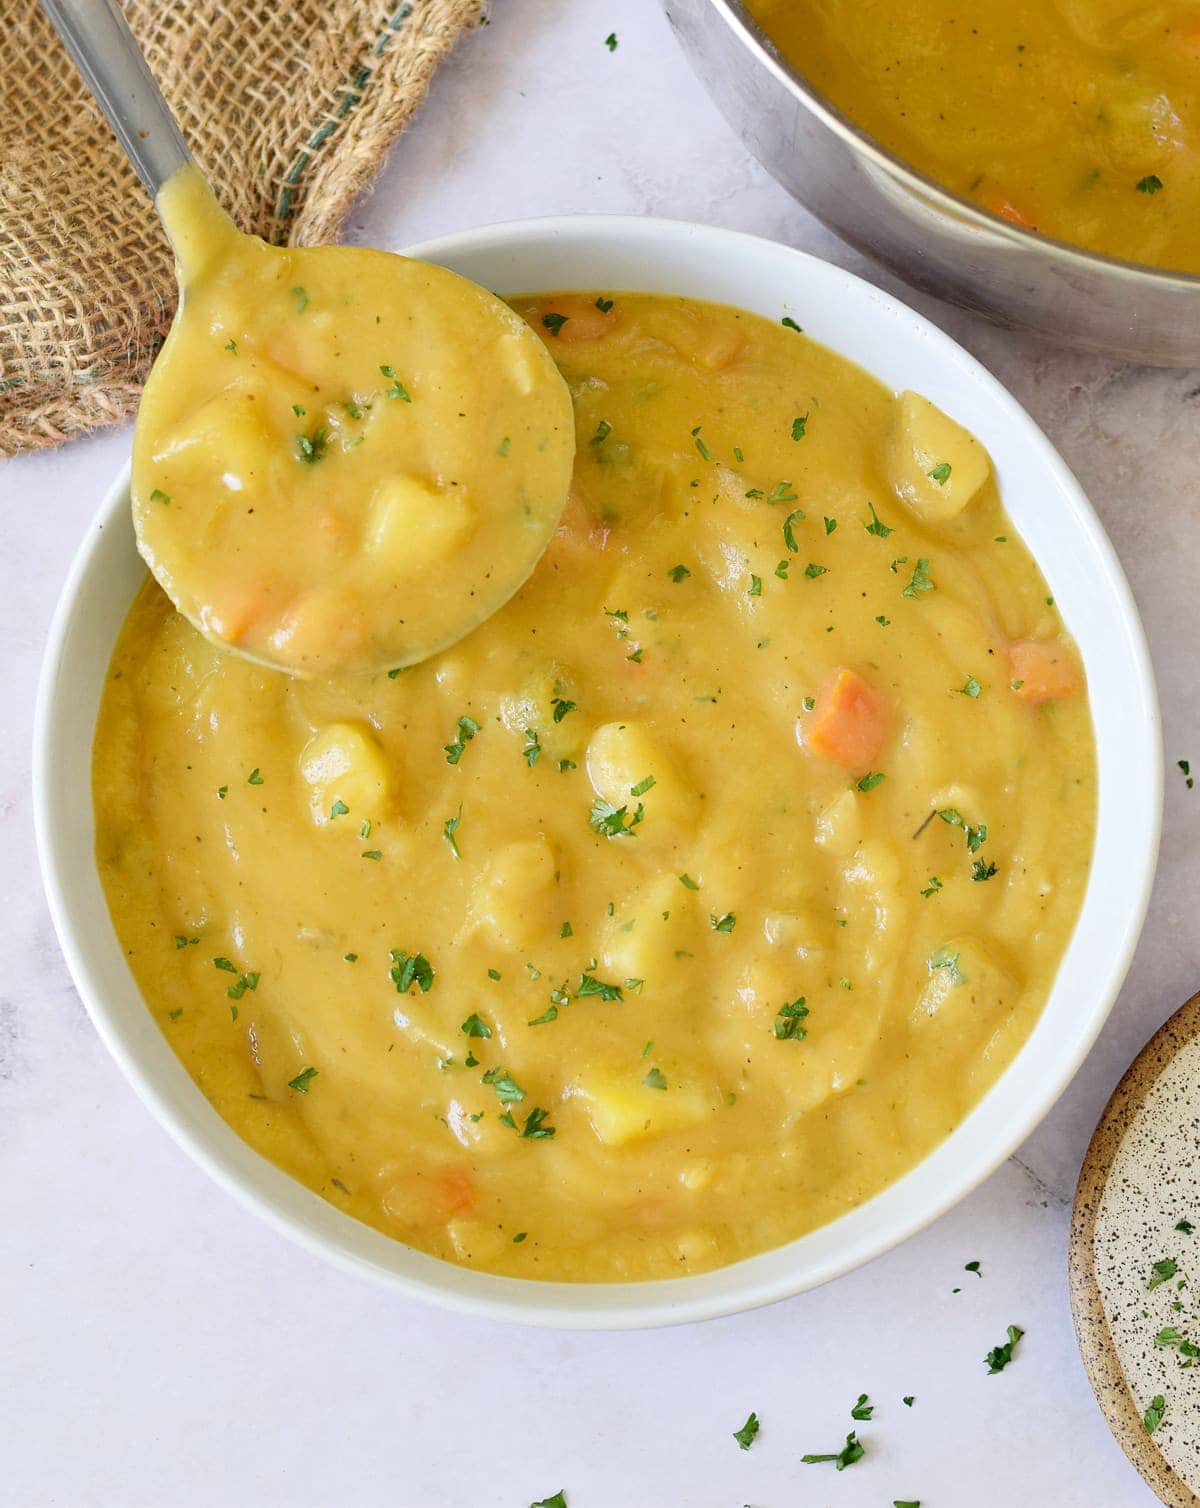 Ladlle over bowl with chunky vegan potato soup